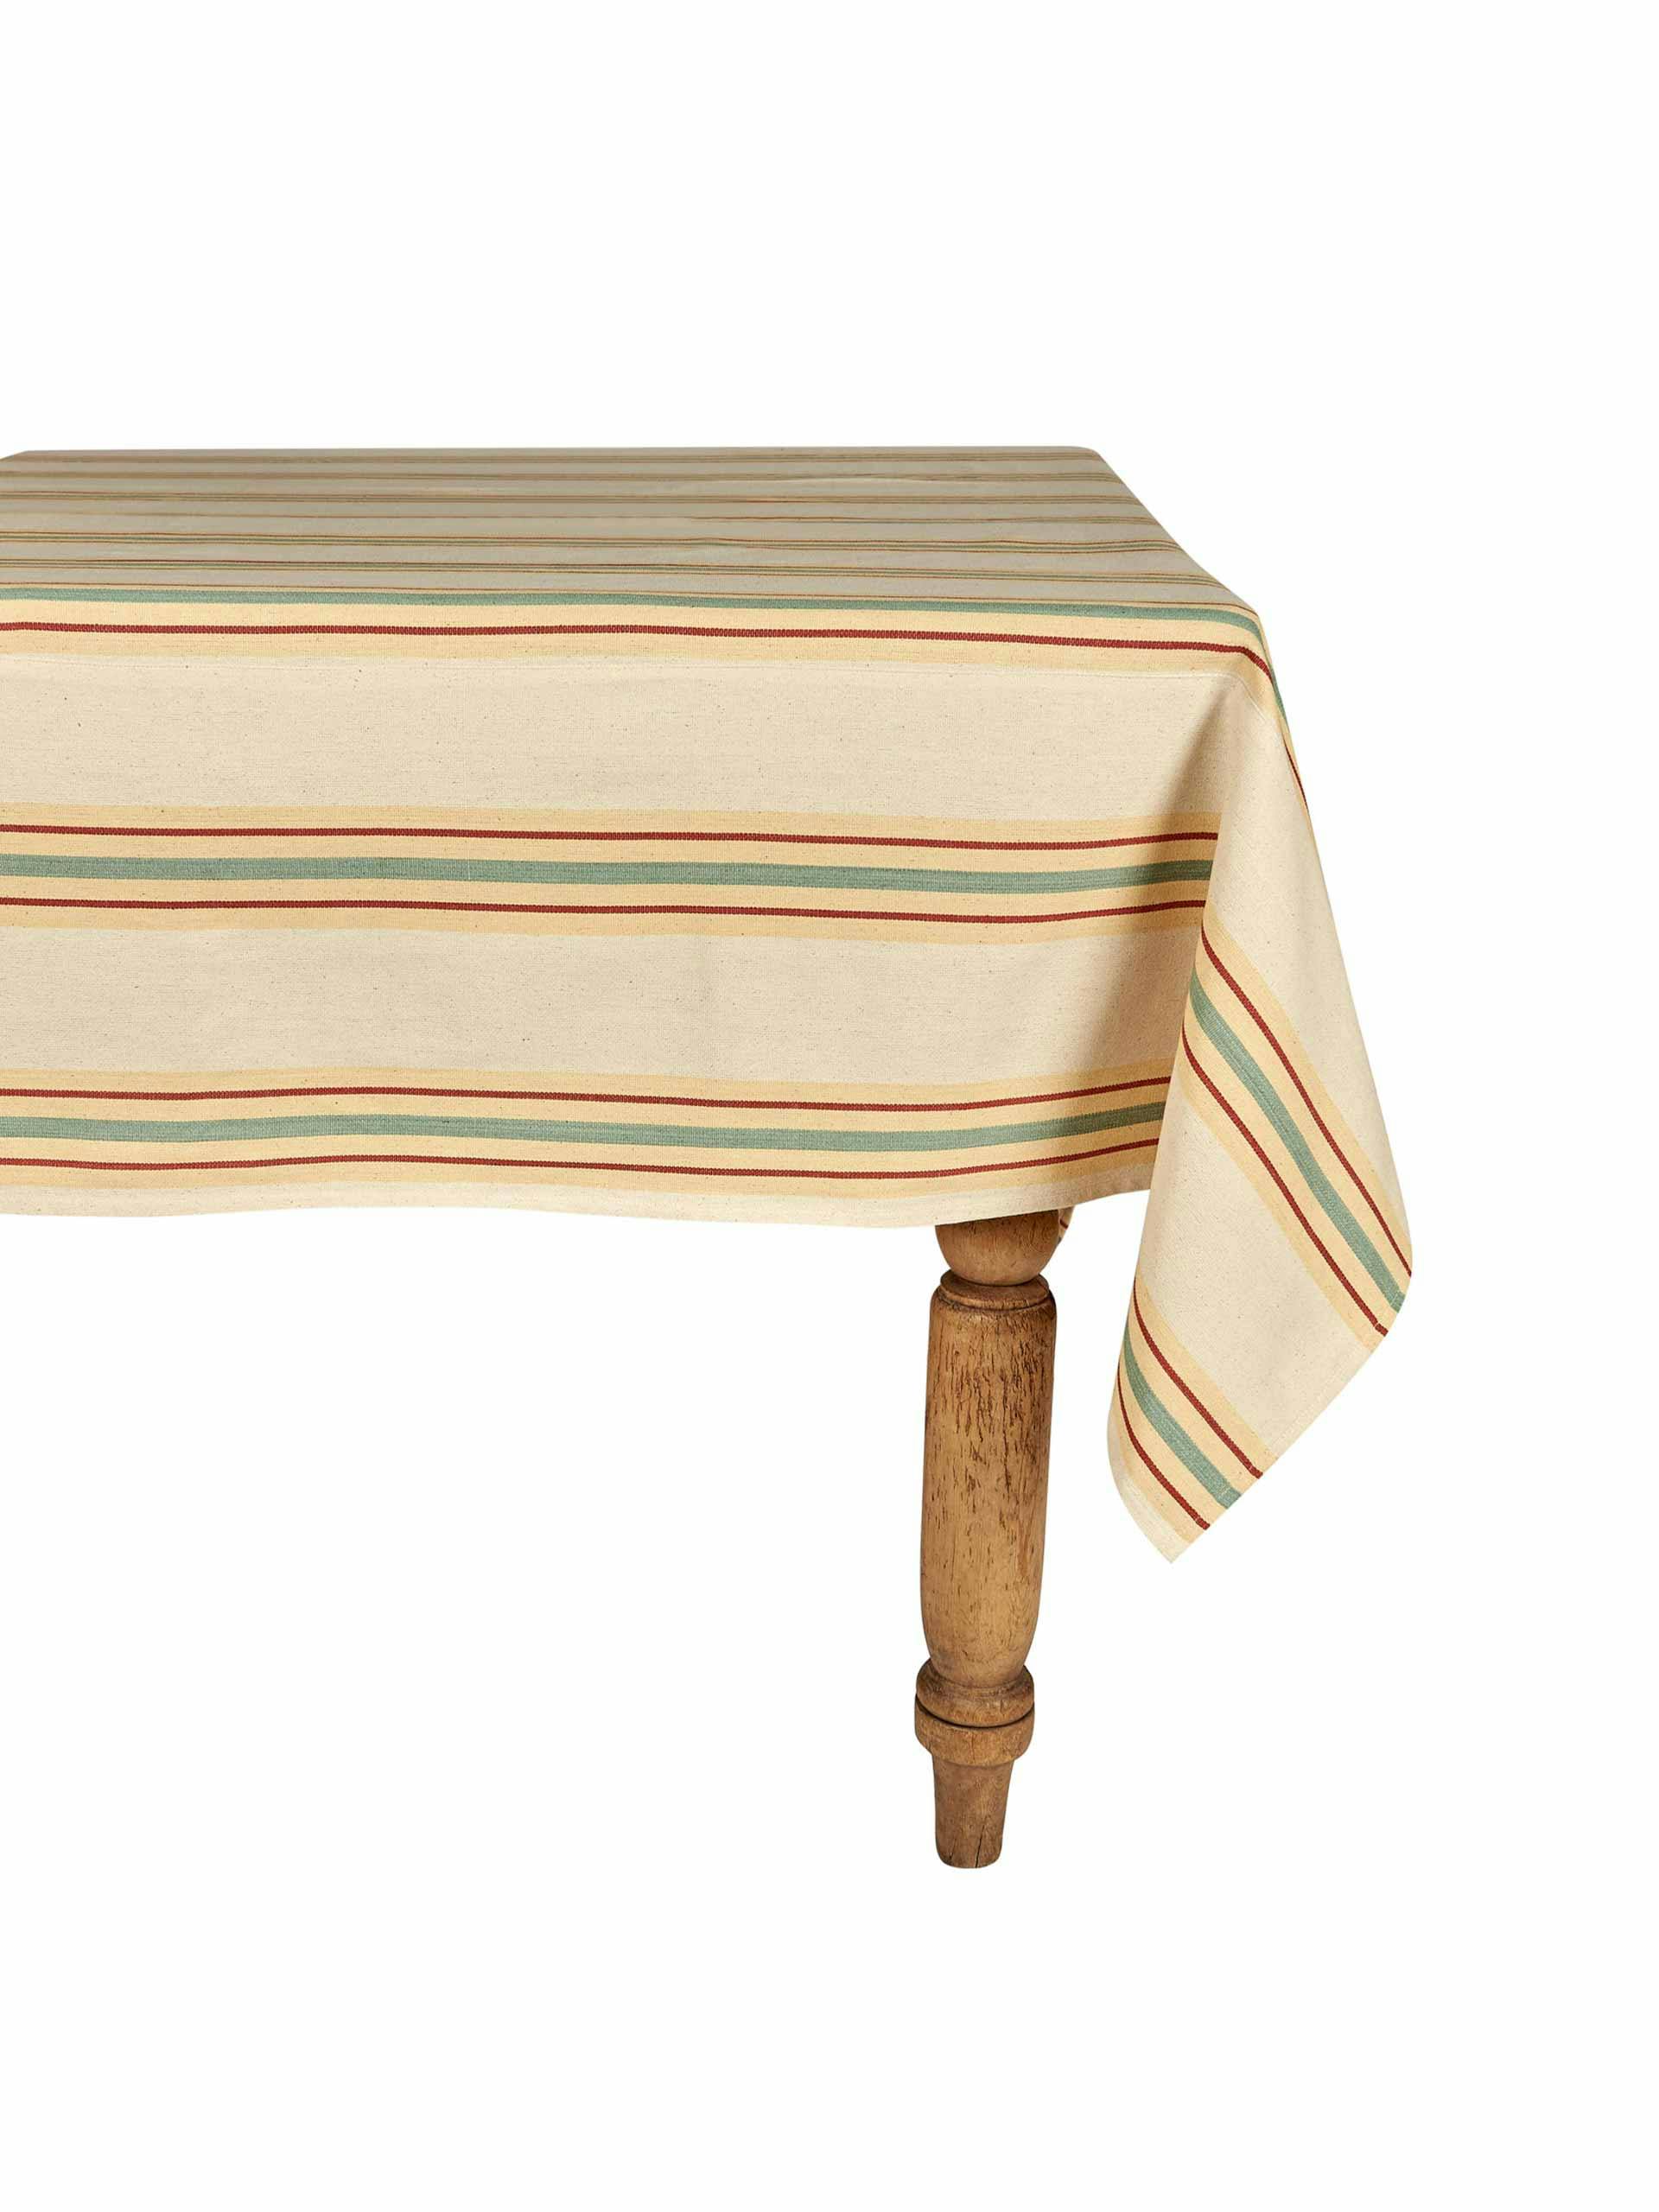 Handwoven cotton tablecloth